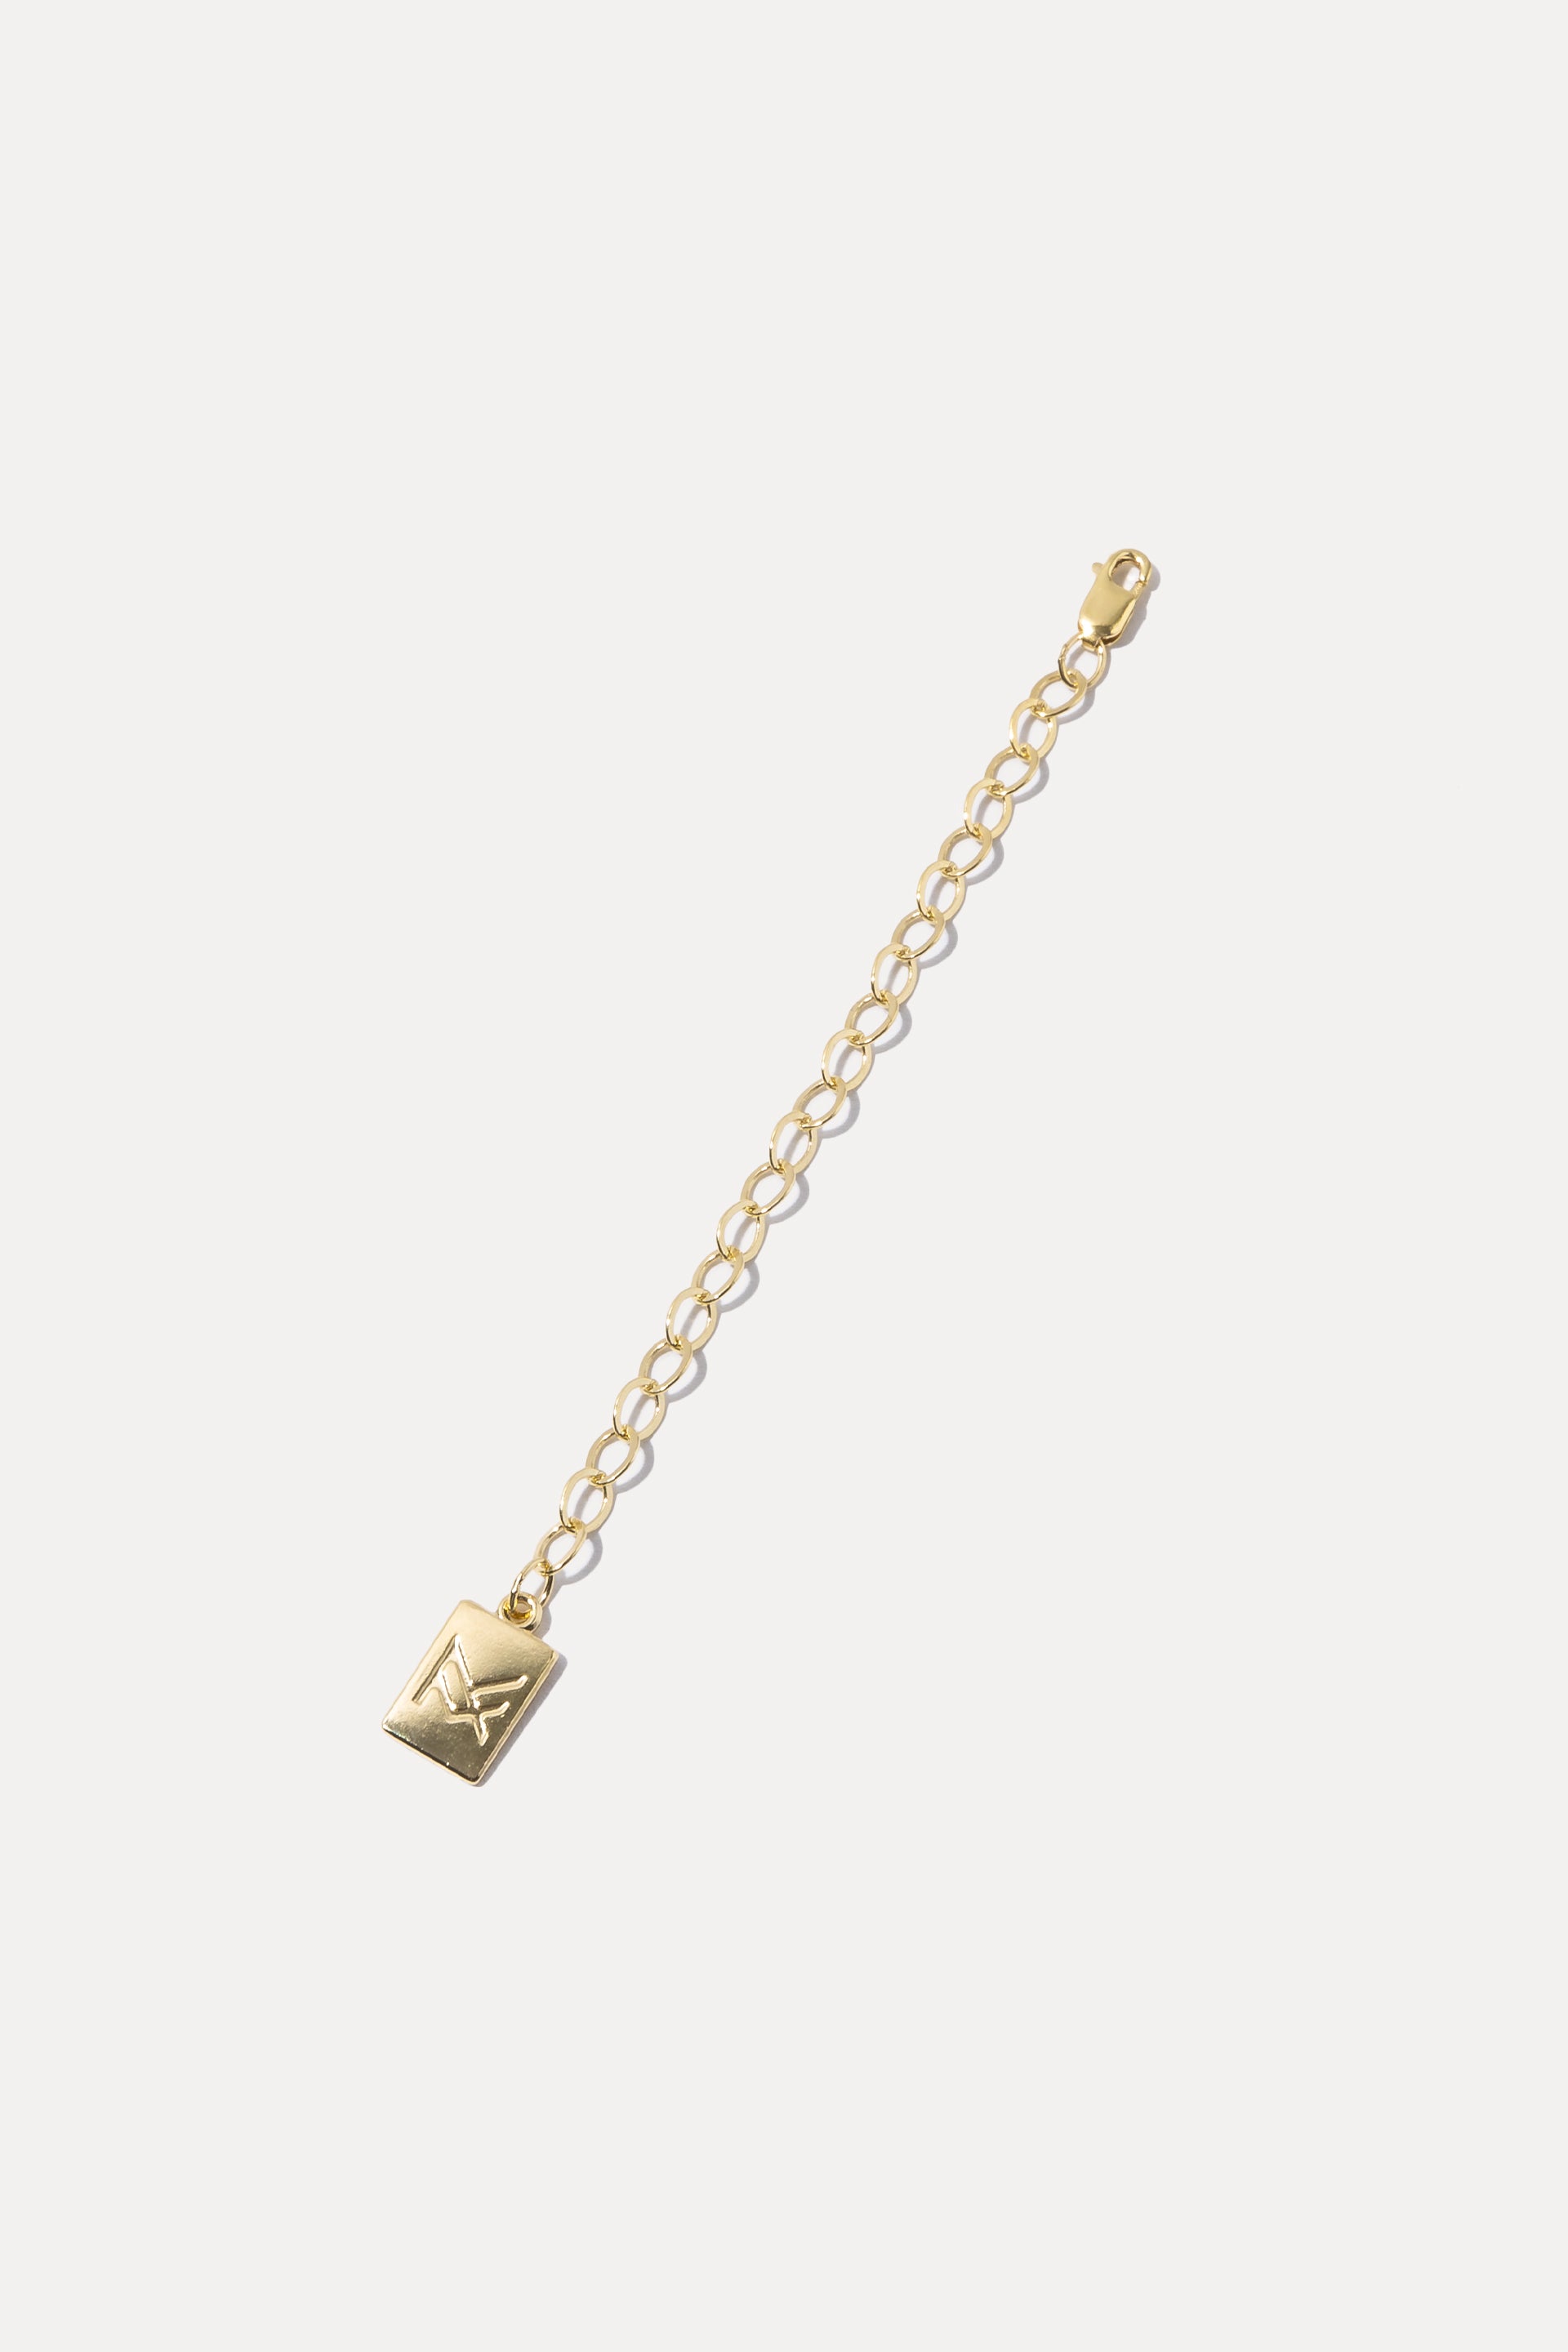 Flower Tennis Necklace - Black Diamond / 14k Yellow Gold – The Last Line